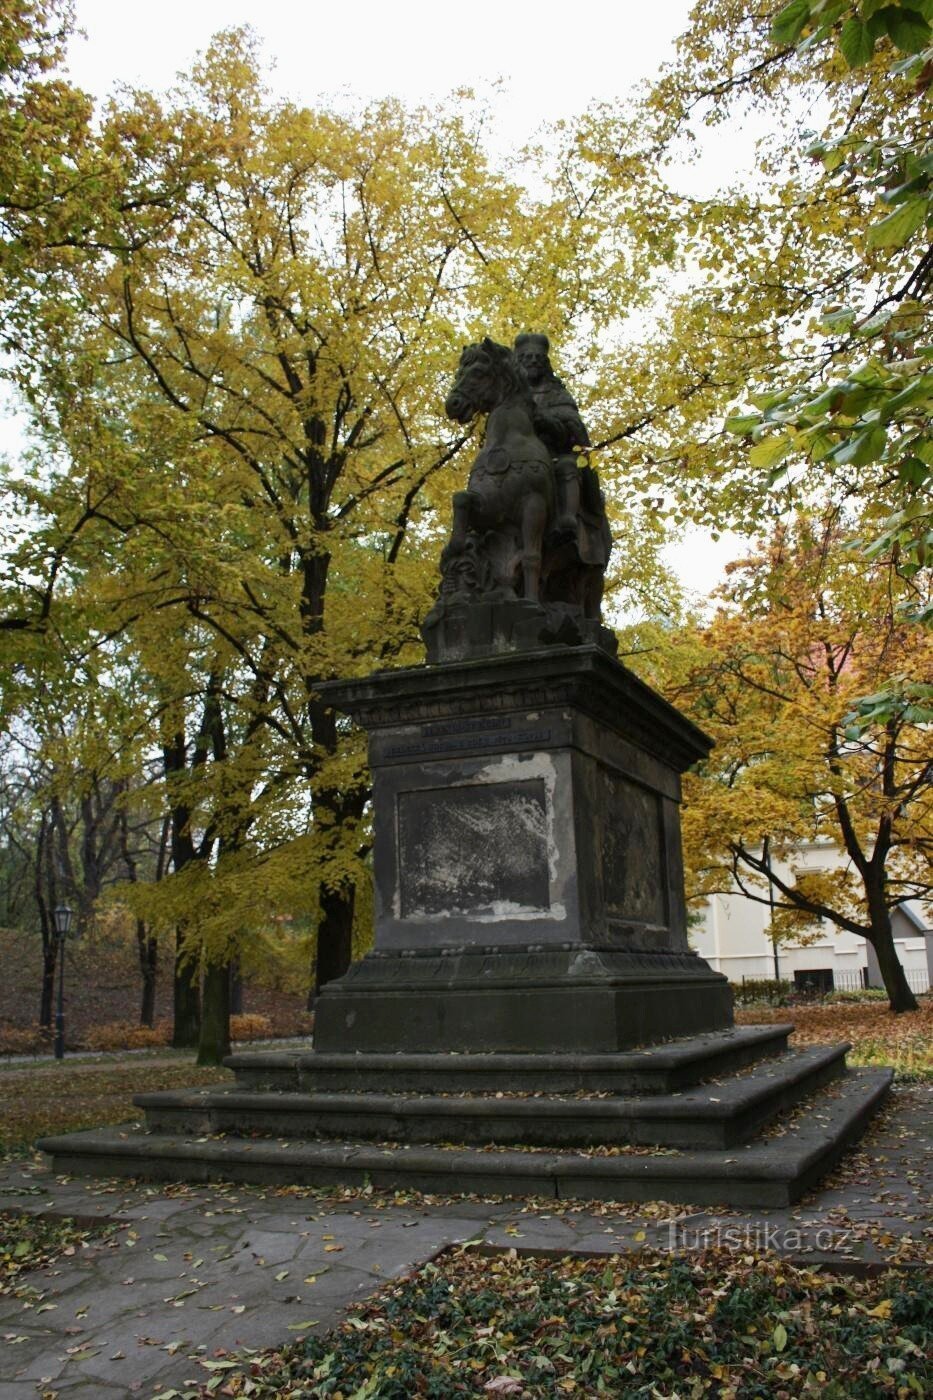 Прага - конный памятник св. Вацлава в Вышеграде